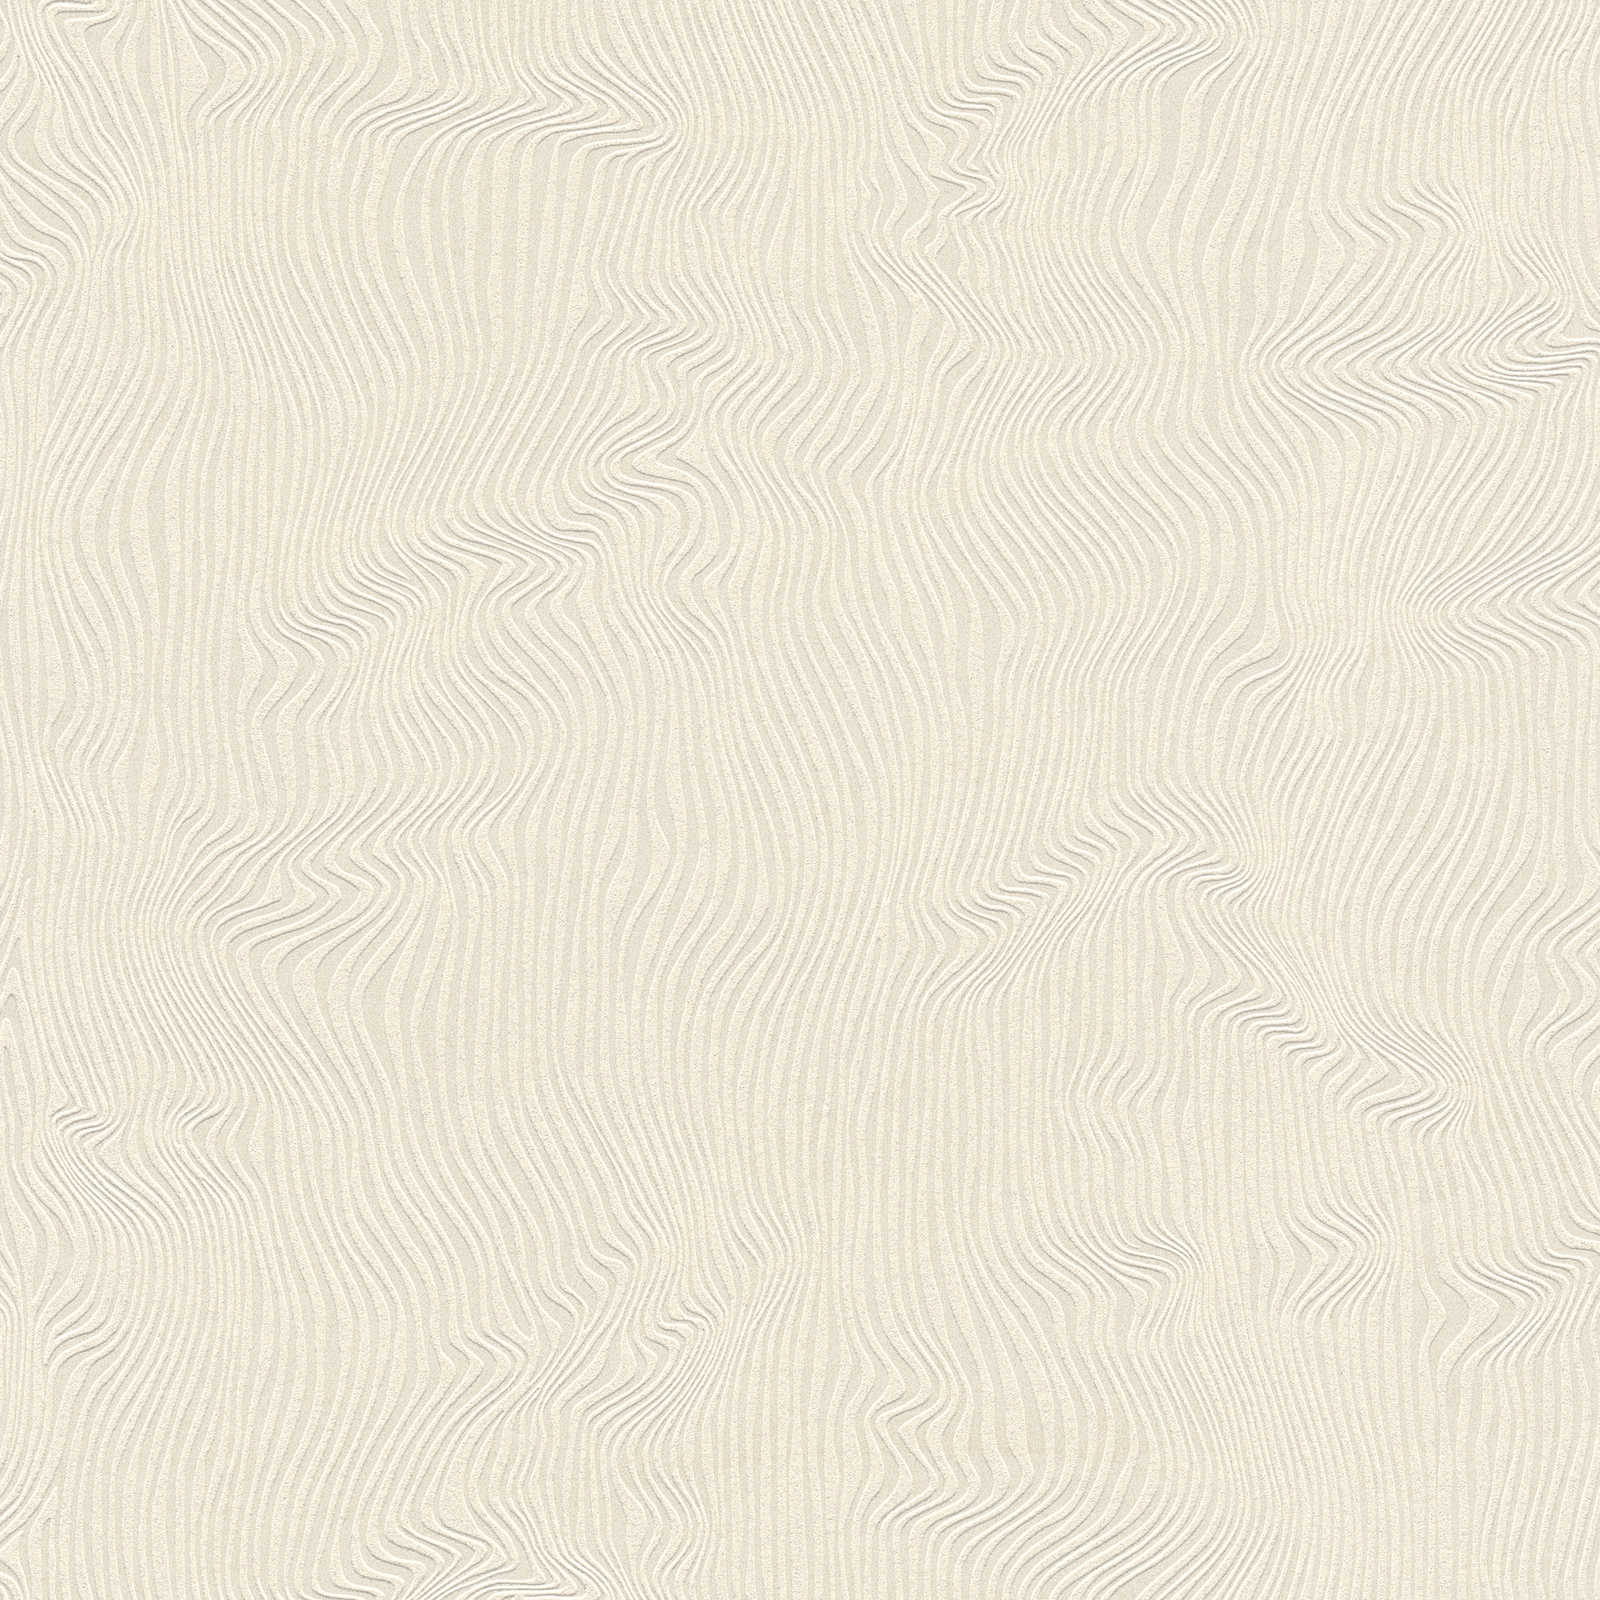 Plain wallpaper with organic line pattern - beige
